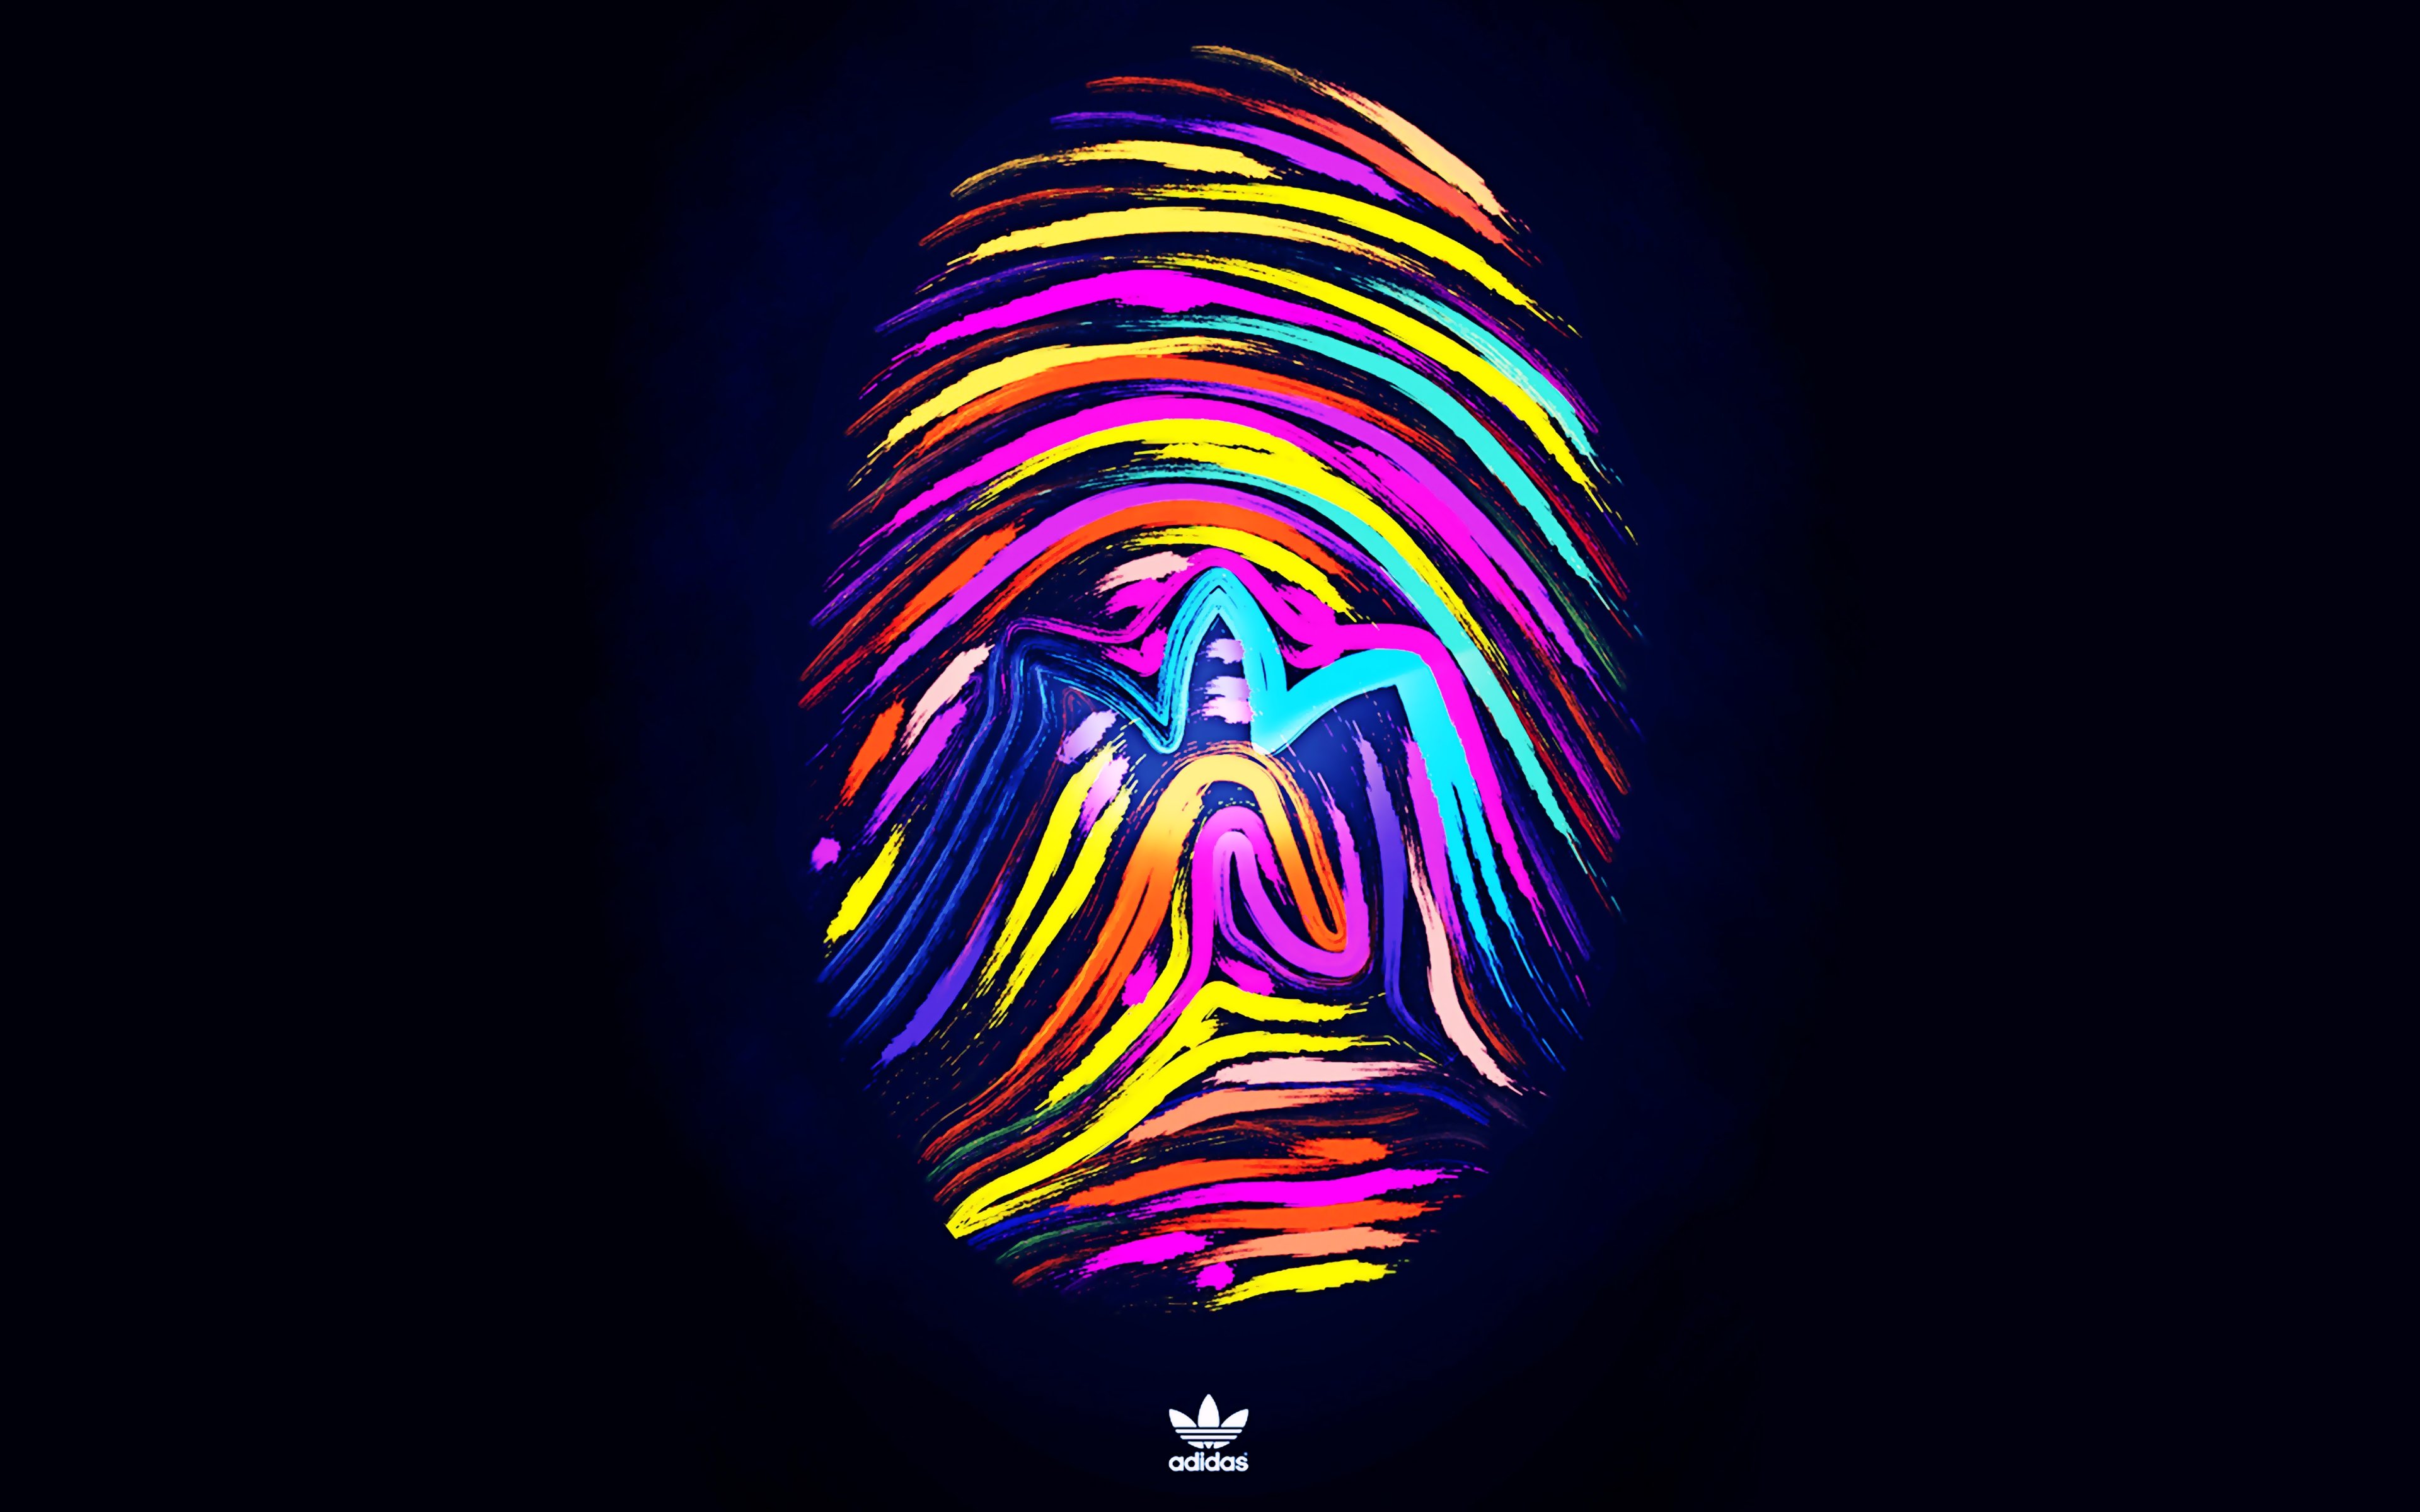 Adidas Background - HD Wallpaper 